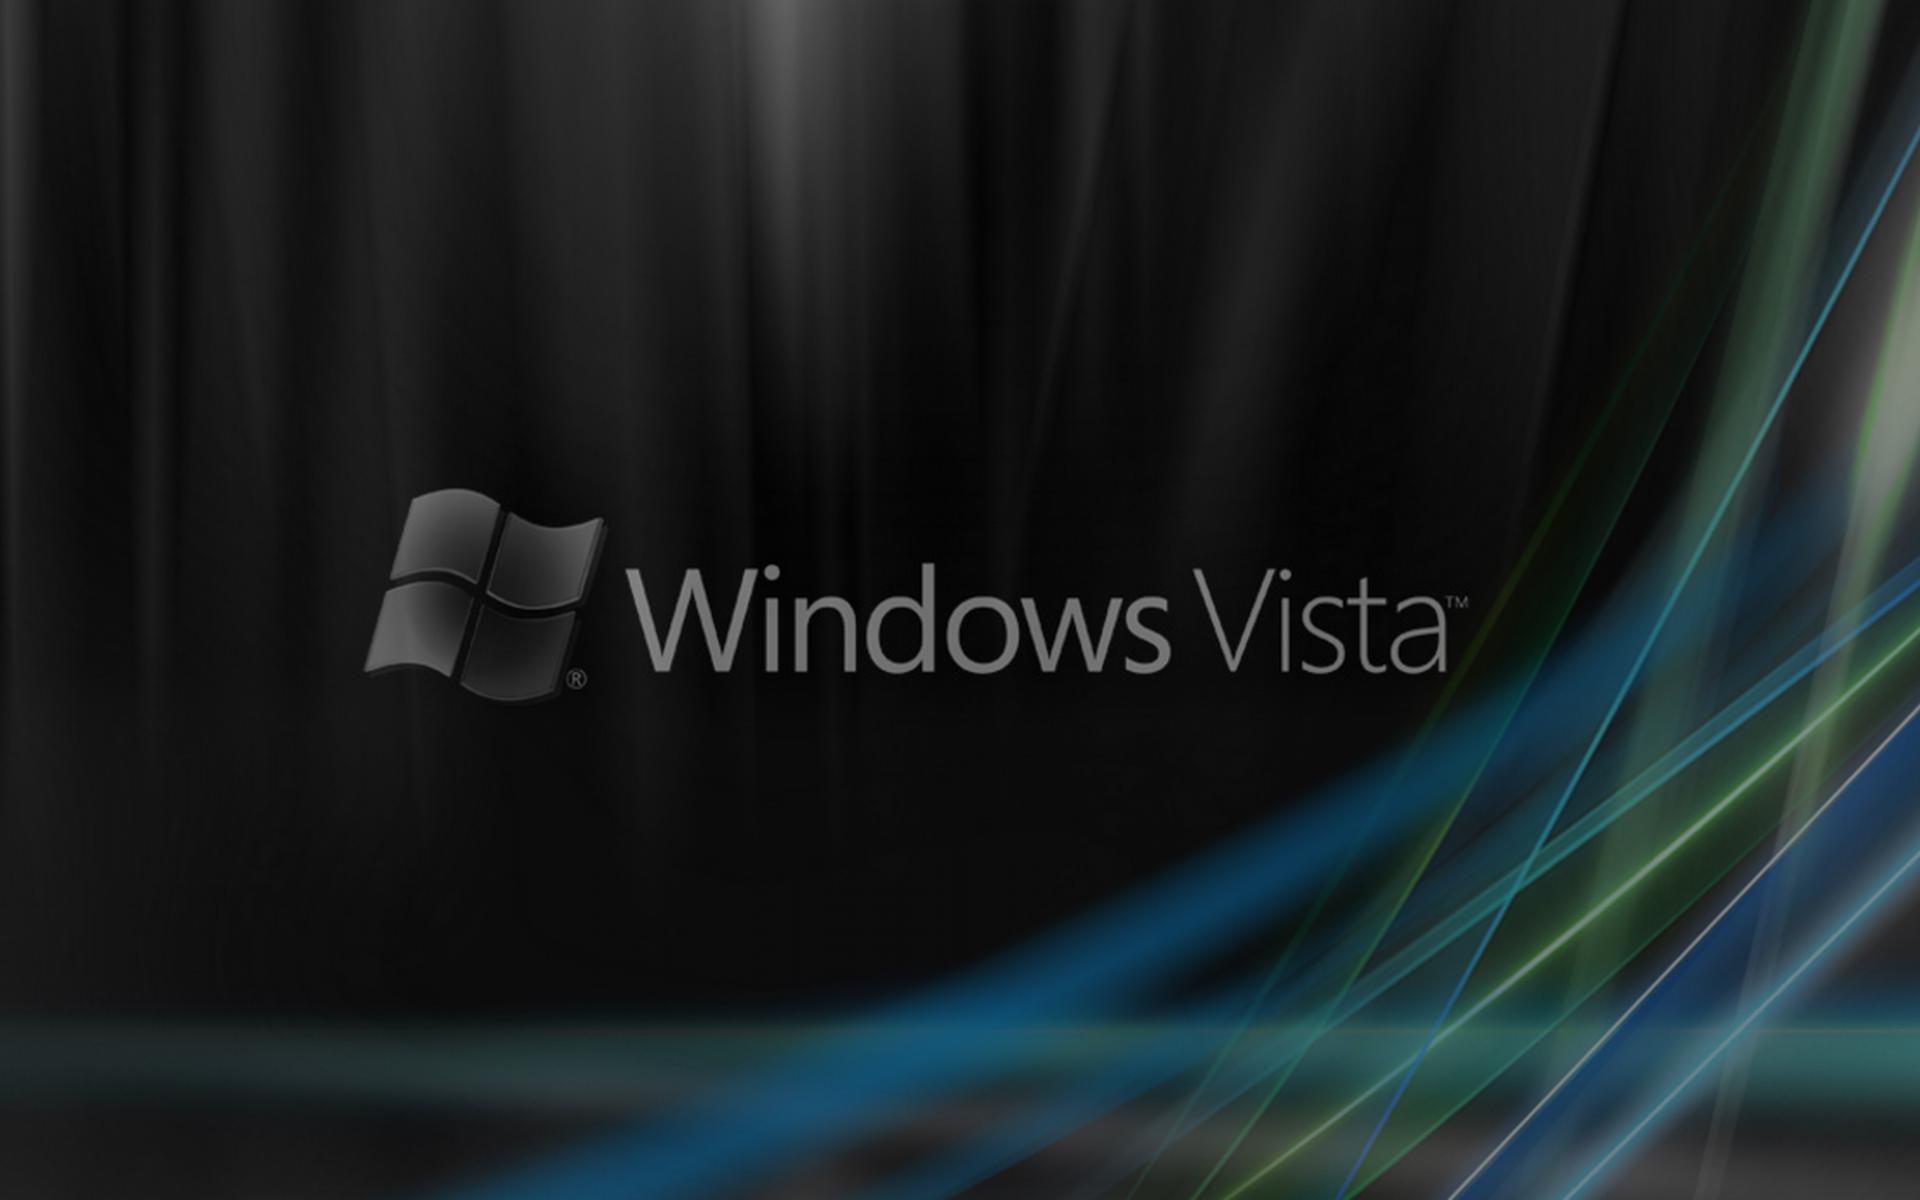 Windows Vista all original wallpapers pack in high resolution : r/windows